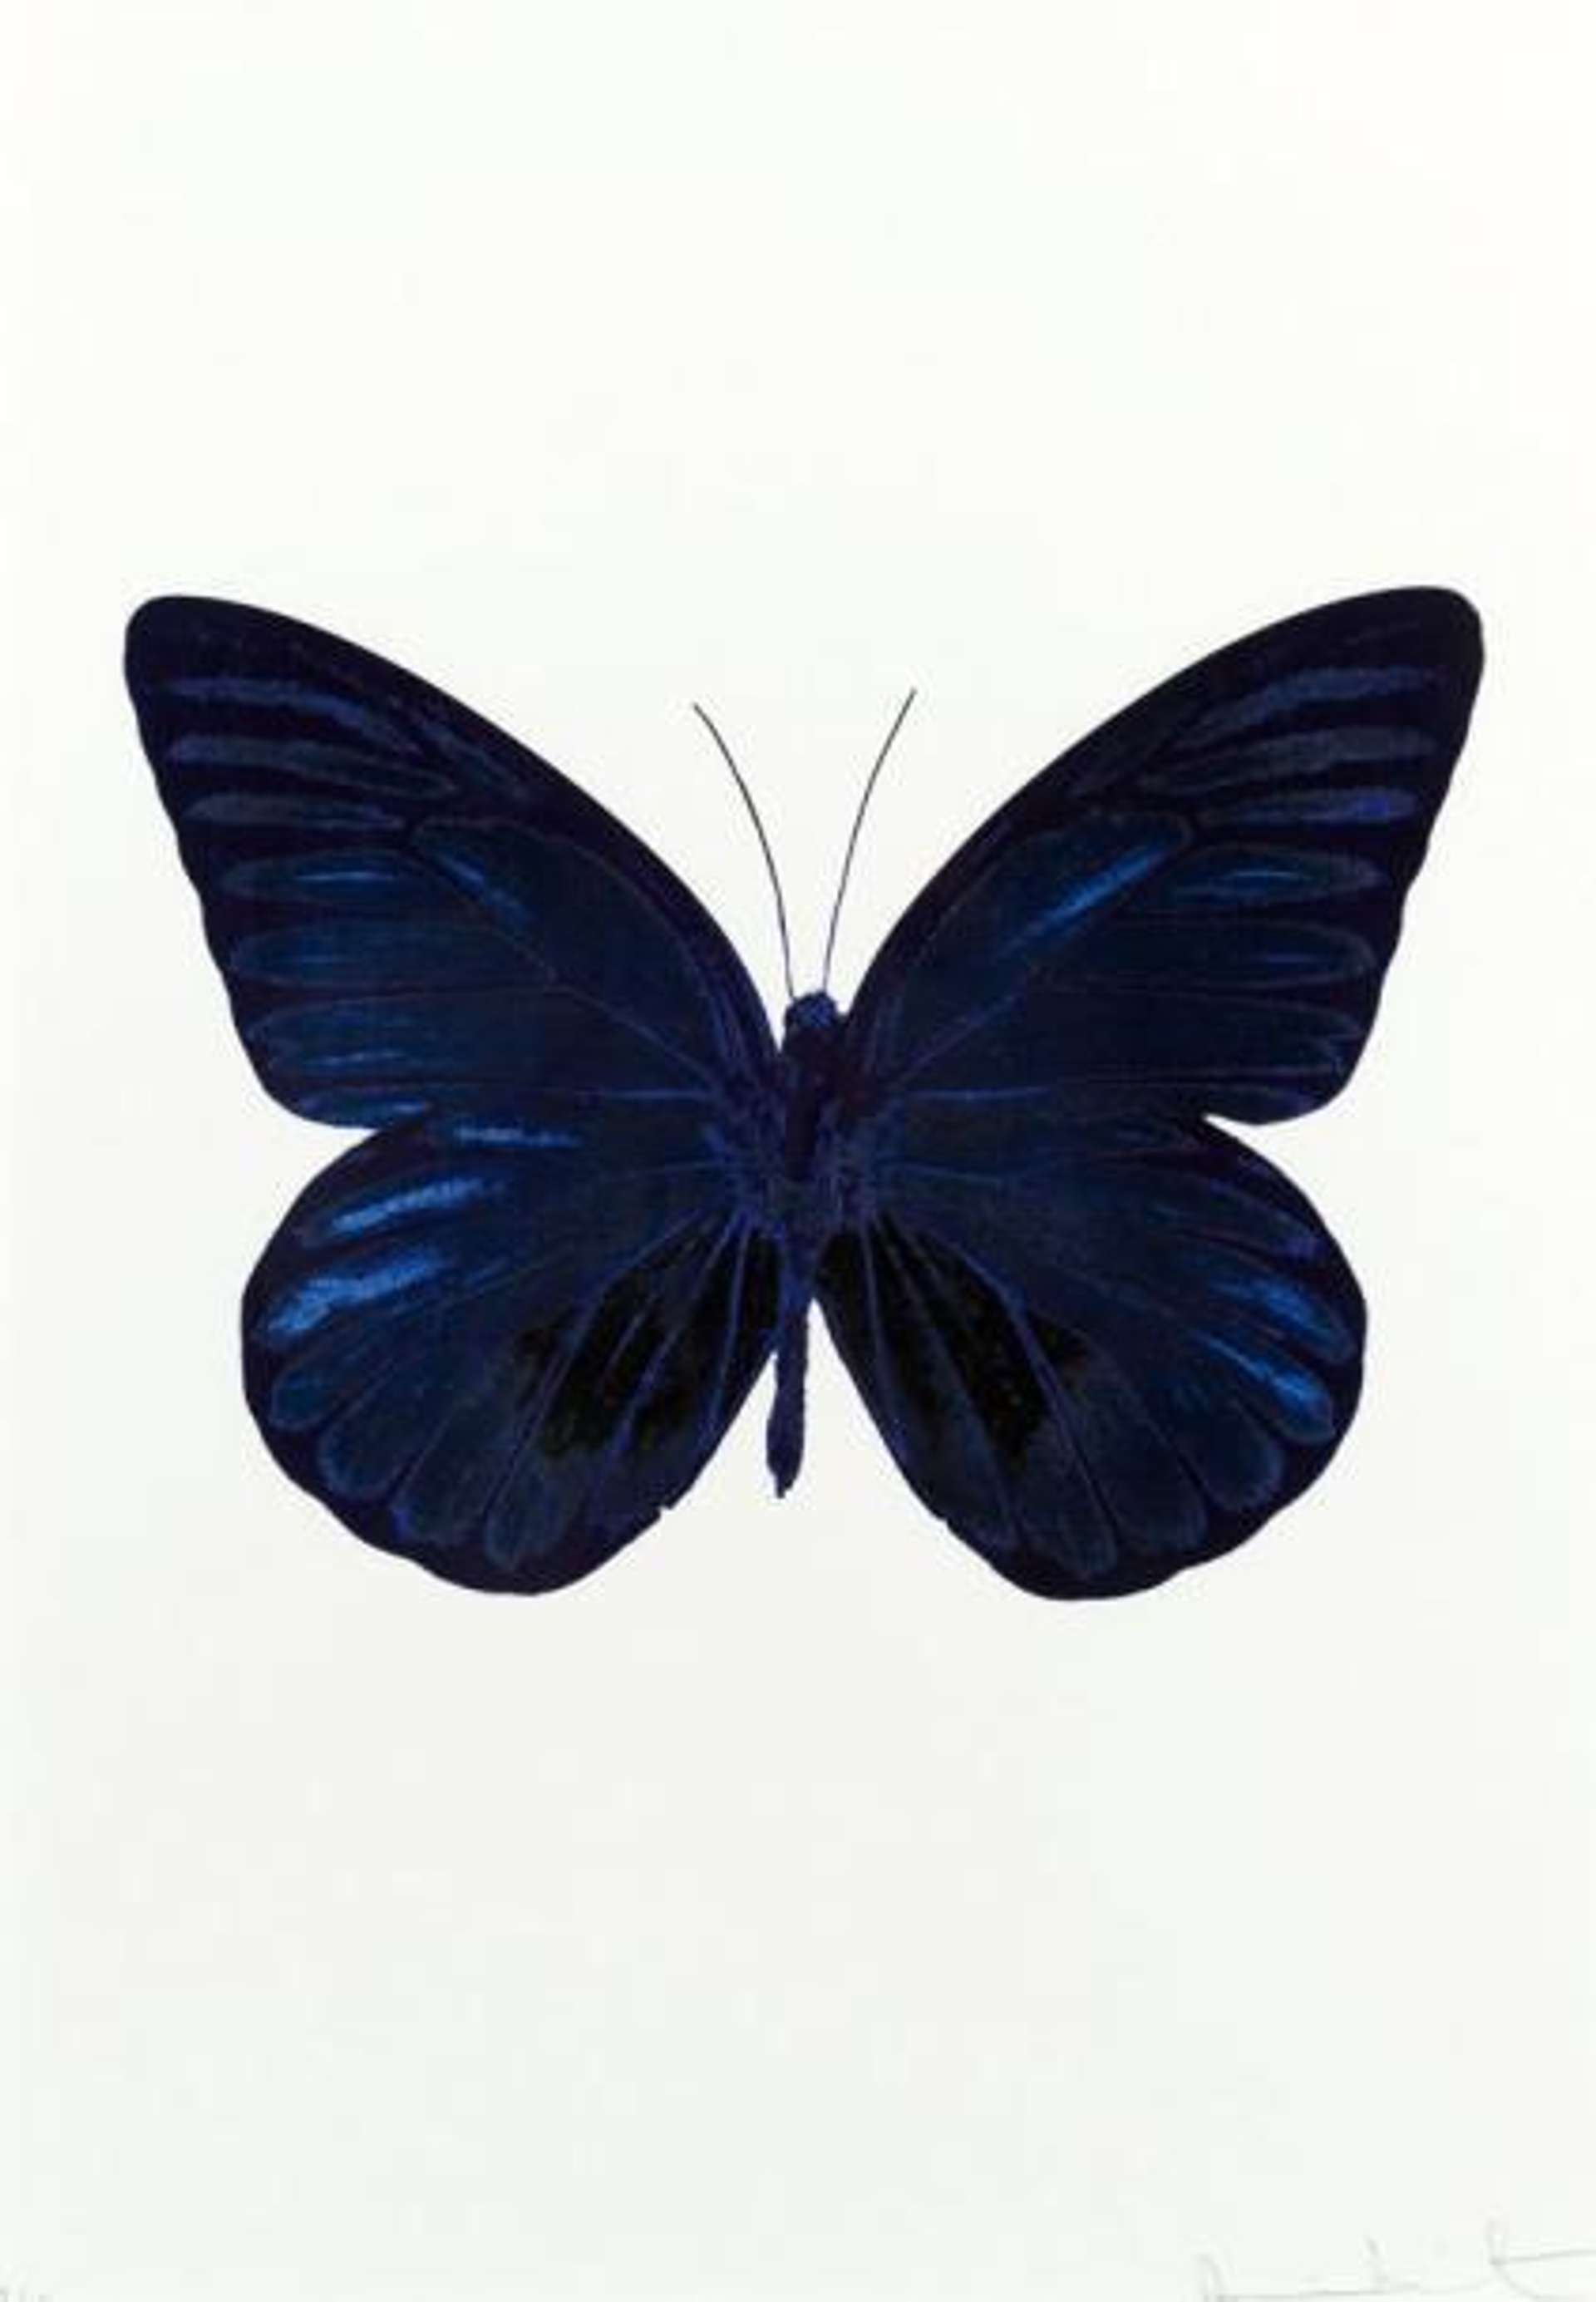 The Souls I (Westminster blue, raven black, imperial purple) - Signed Print by Damien Hirst 2010 - MyArtBroker